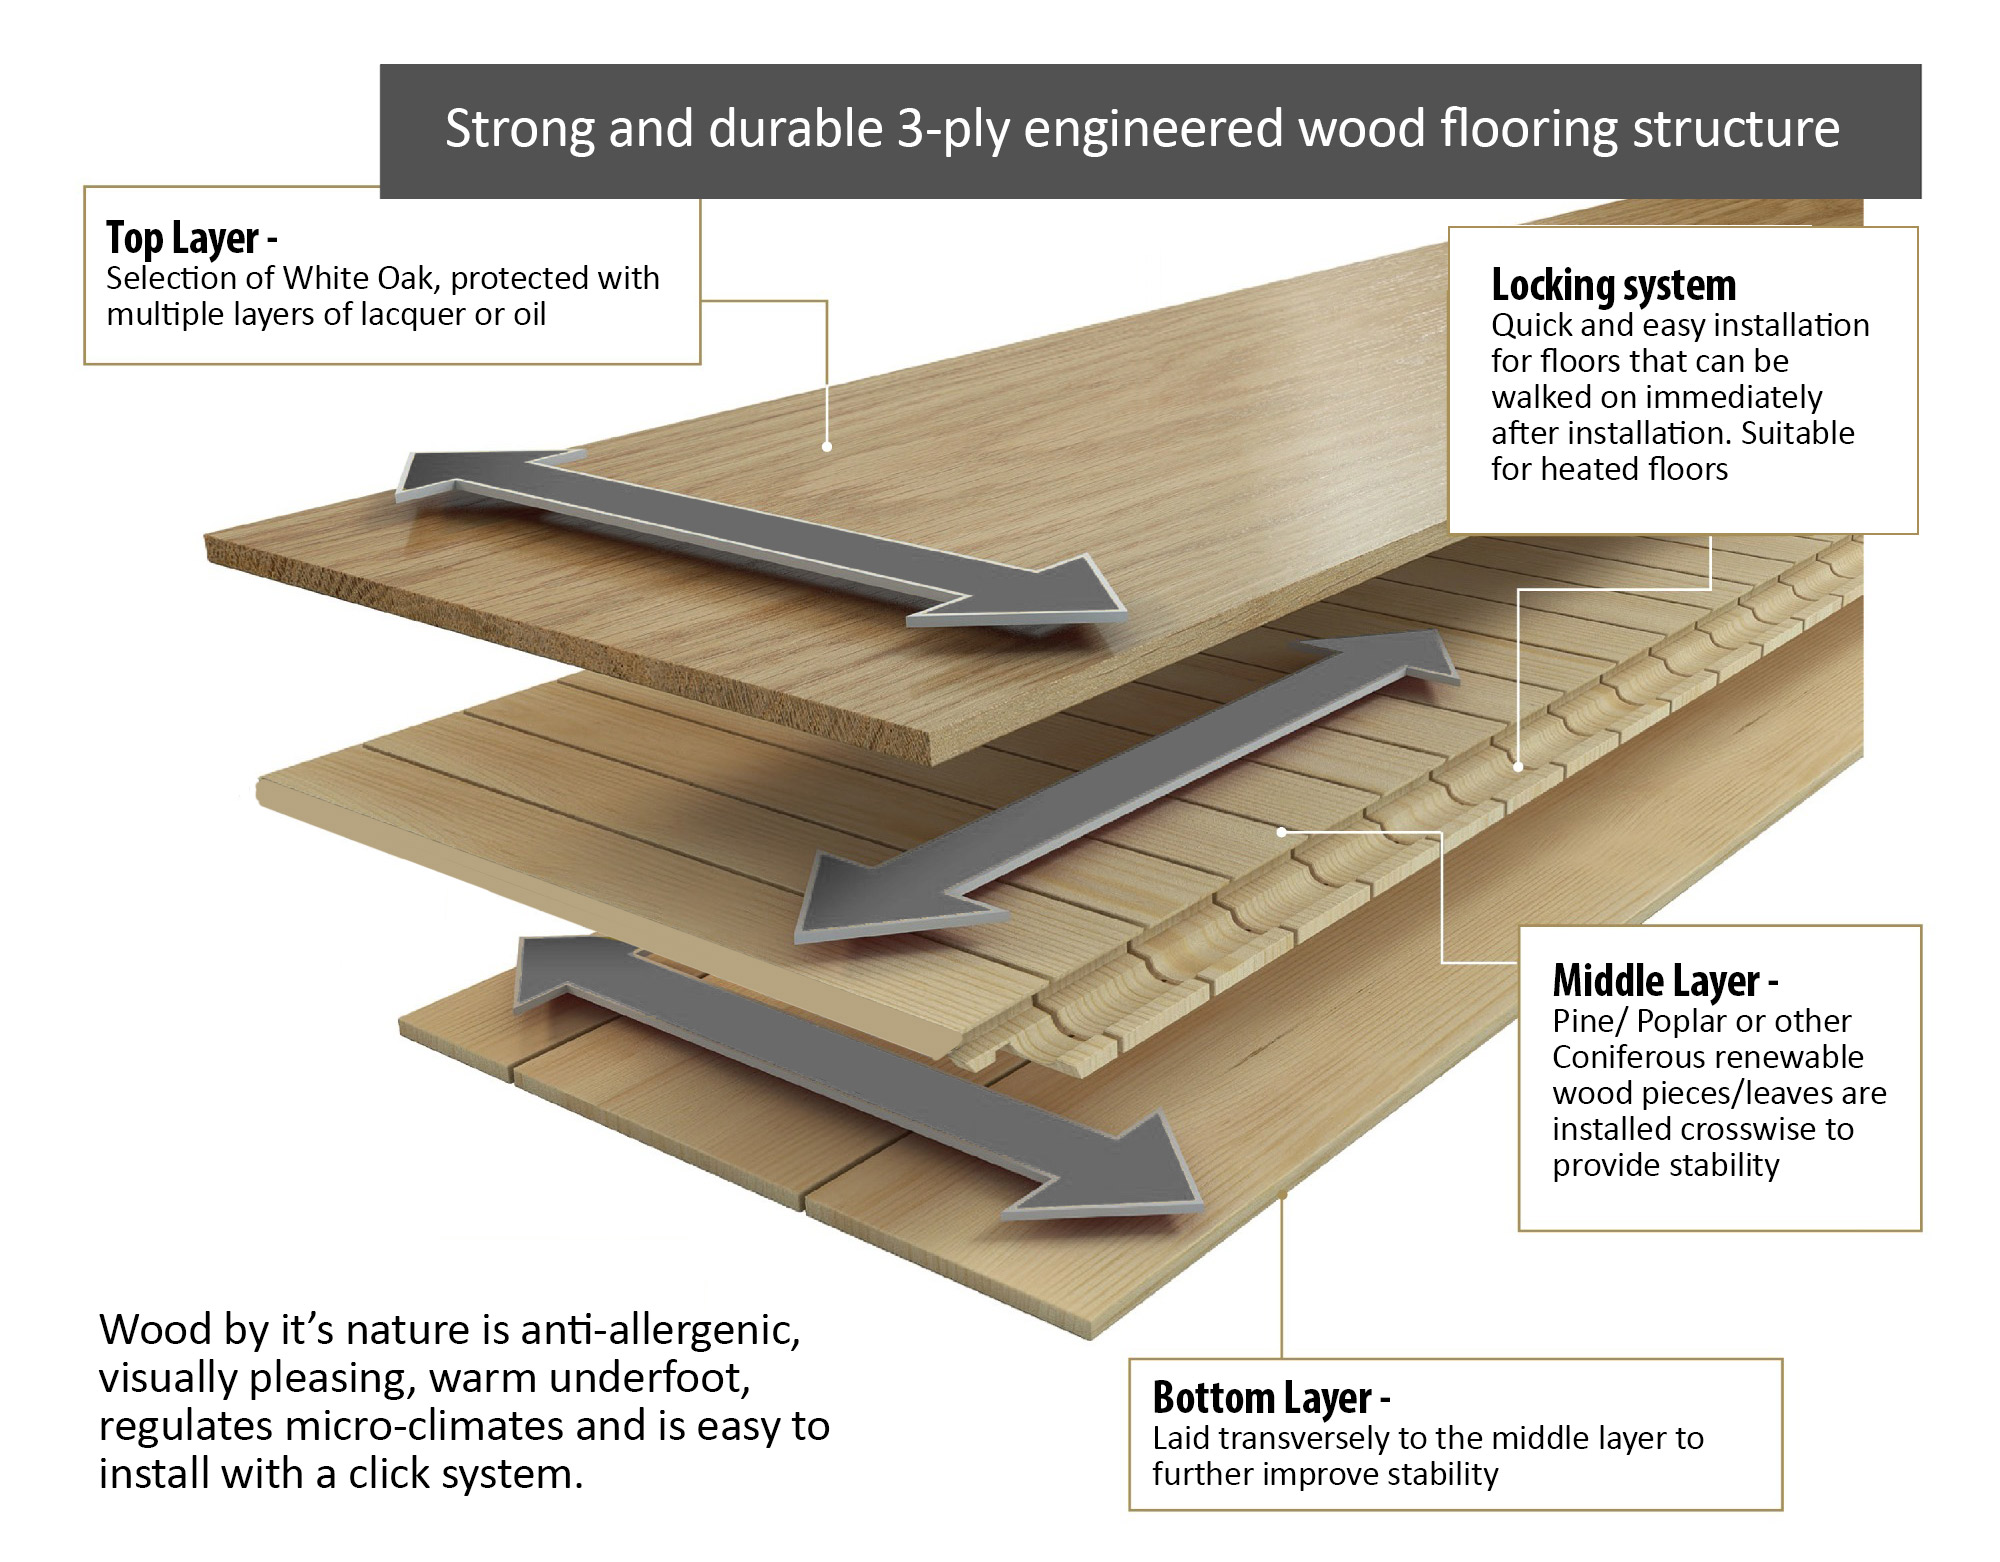 benefits of 3-ply engineered wood flooring